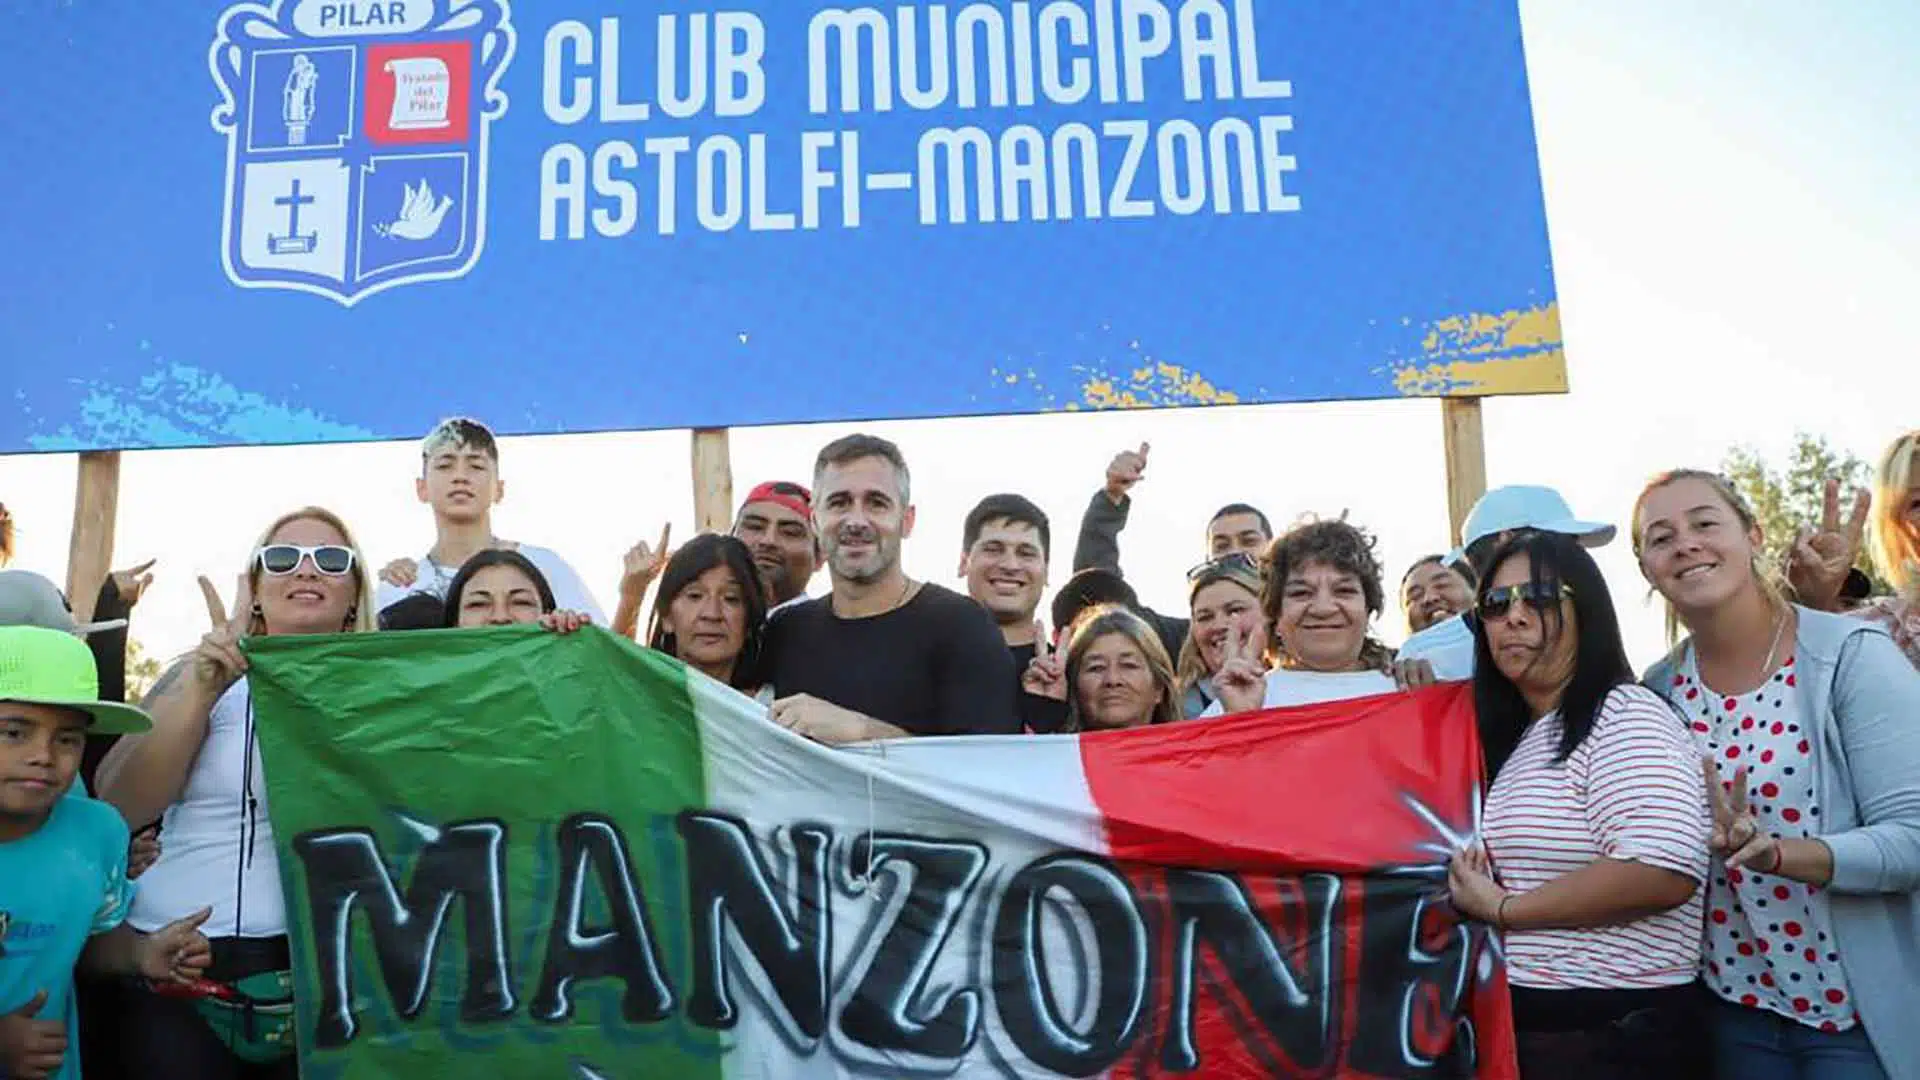 Club Astolfi Manzone